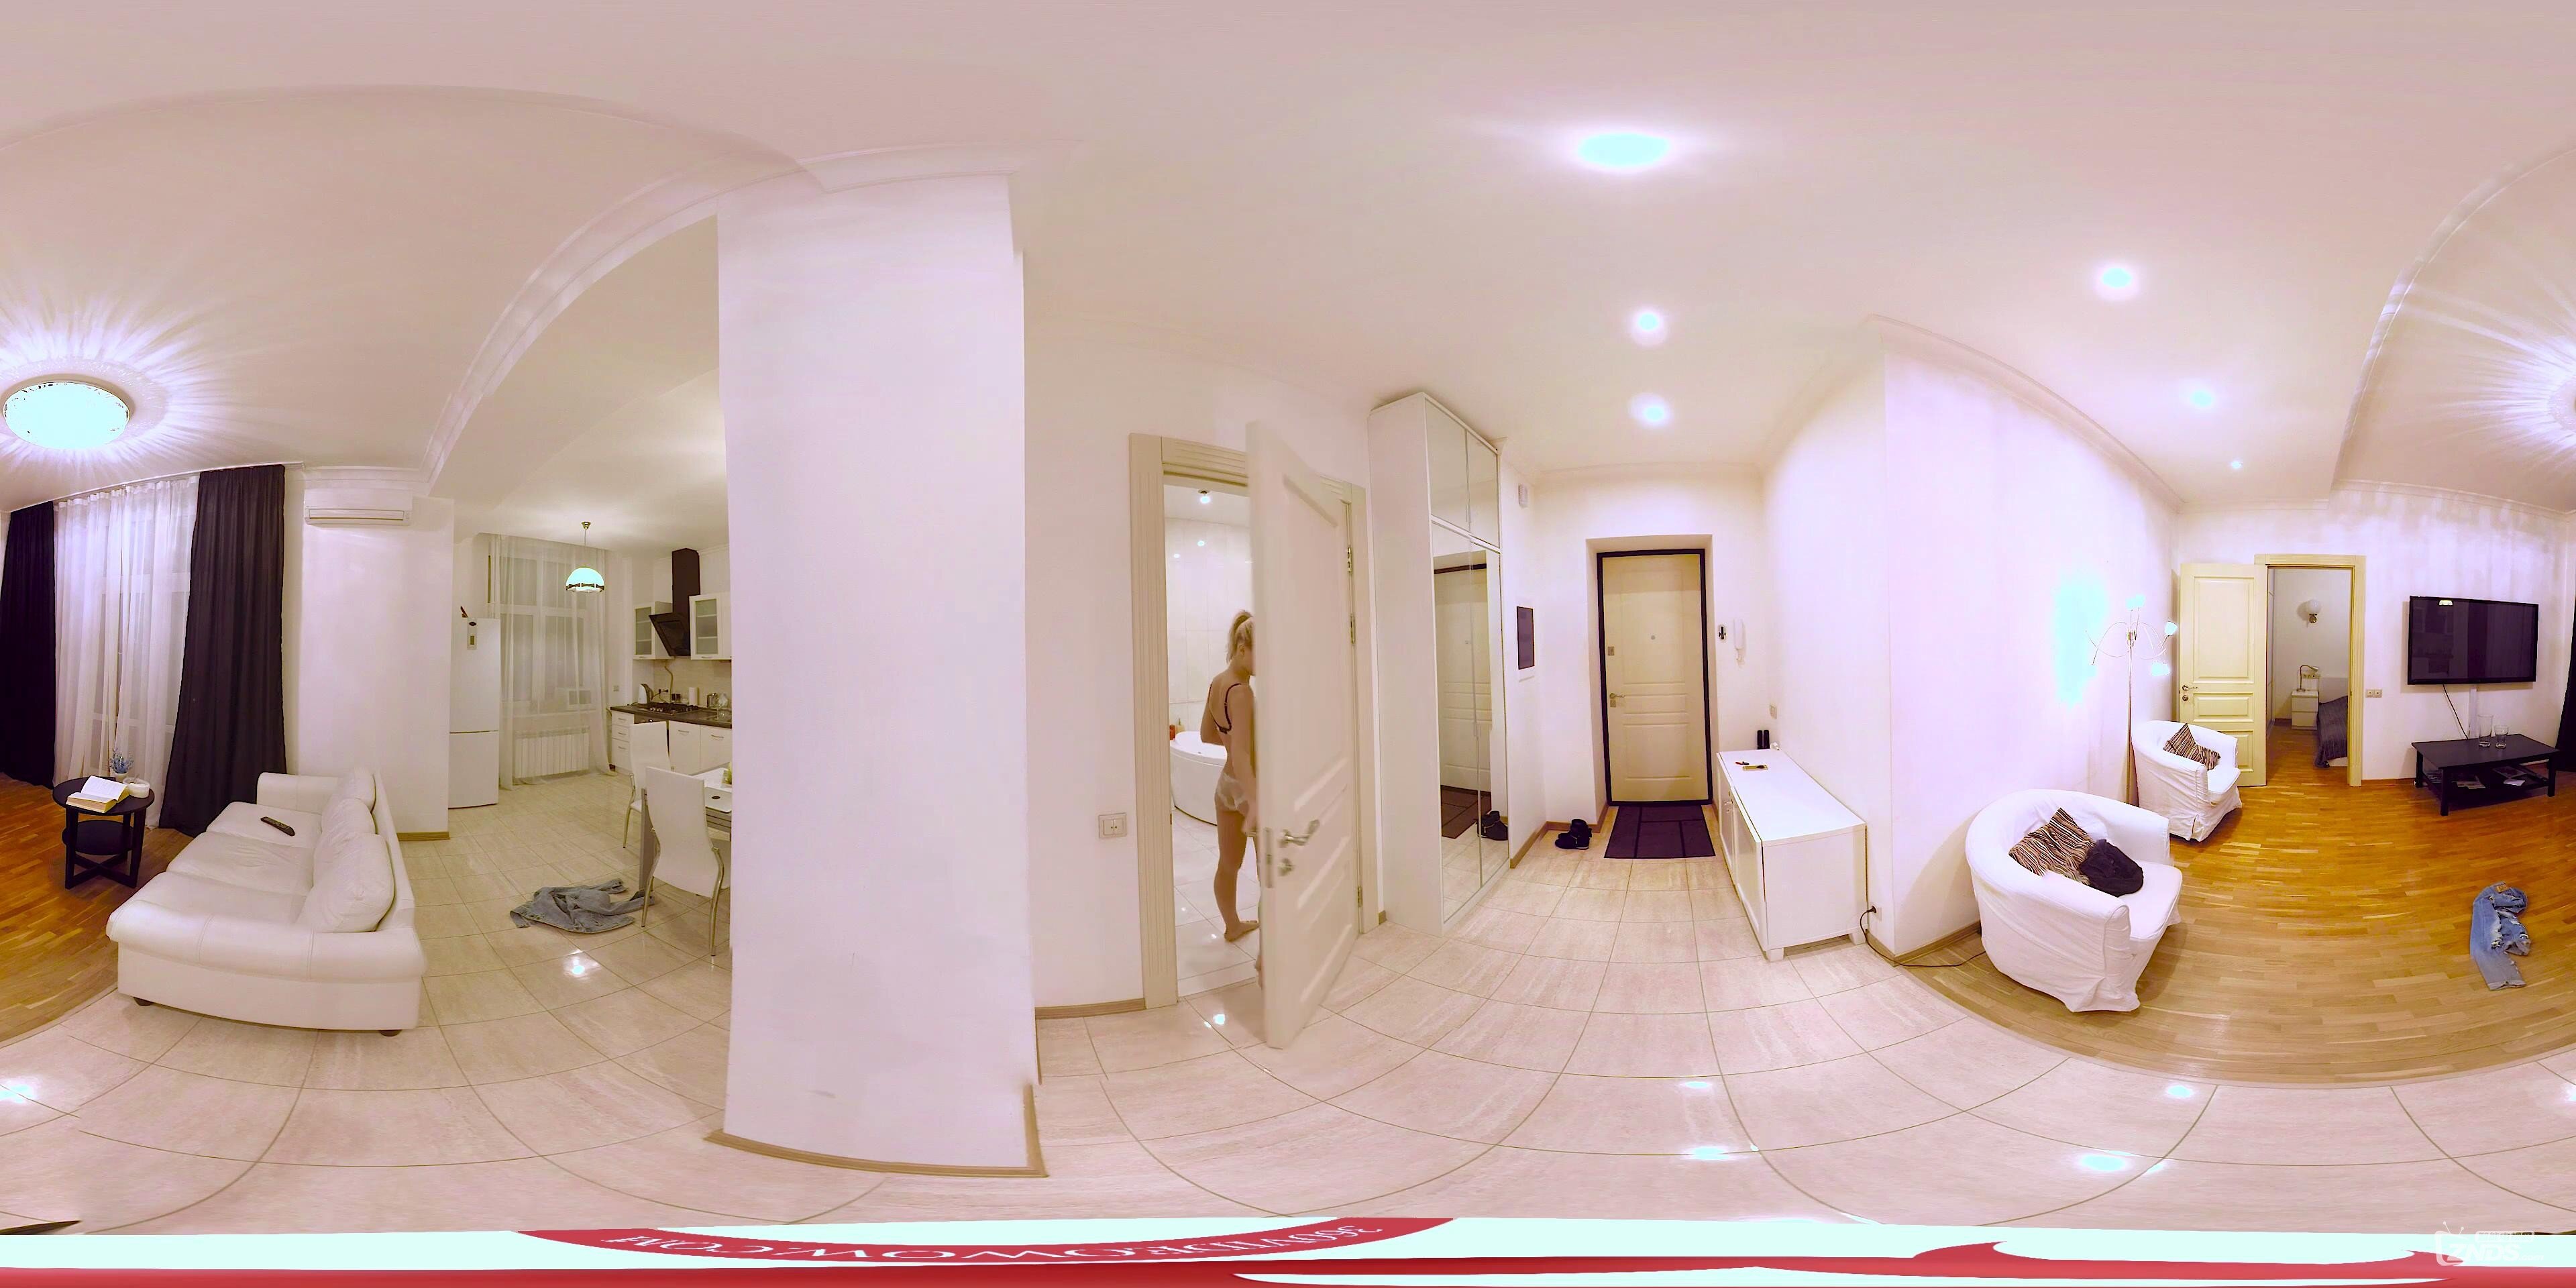 Sexy Girl 360 Video - Taking the Perfect Bath - VR Oculus Rift virtual reality g.jpg